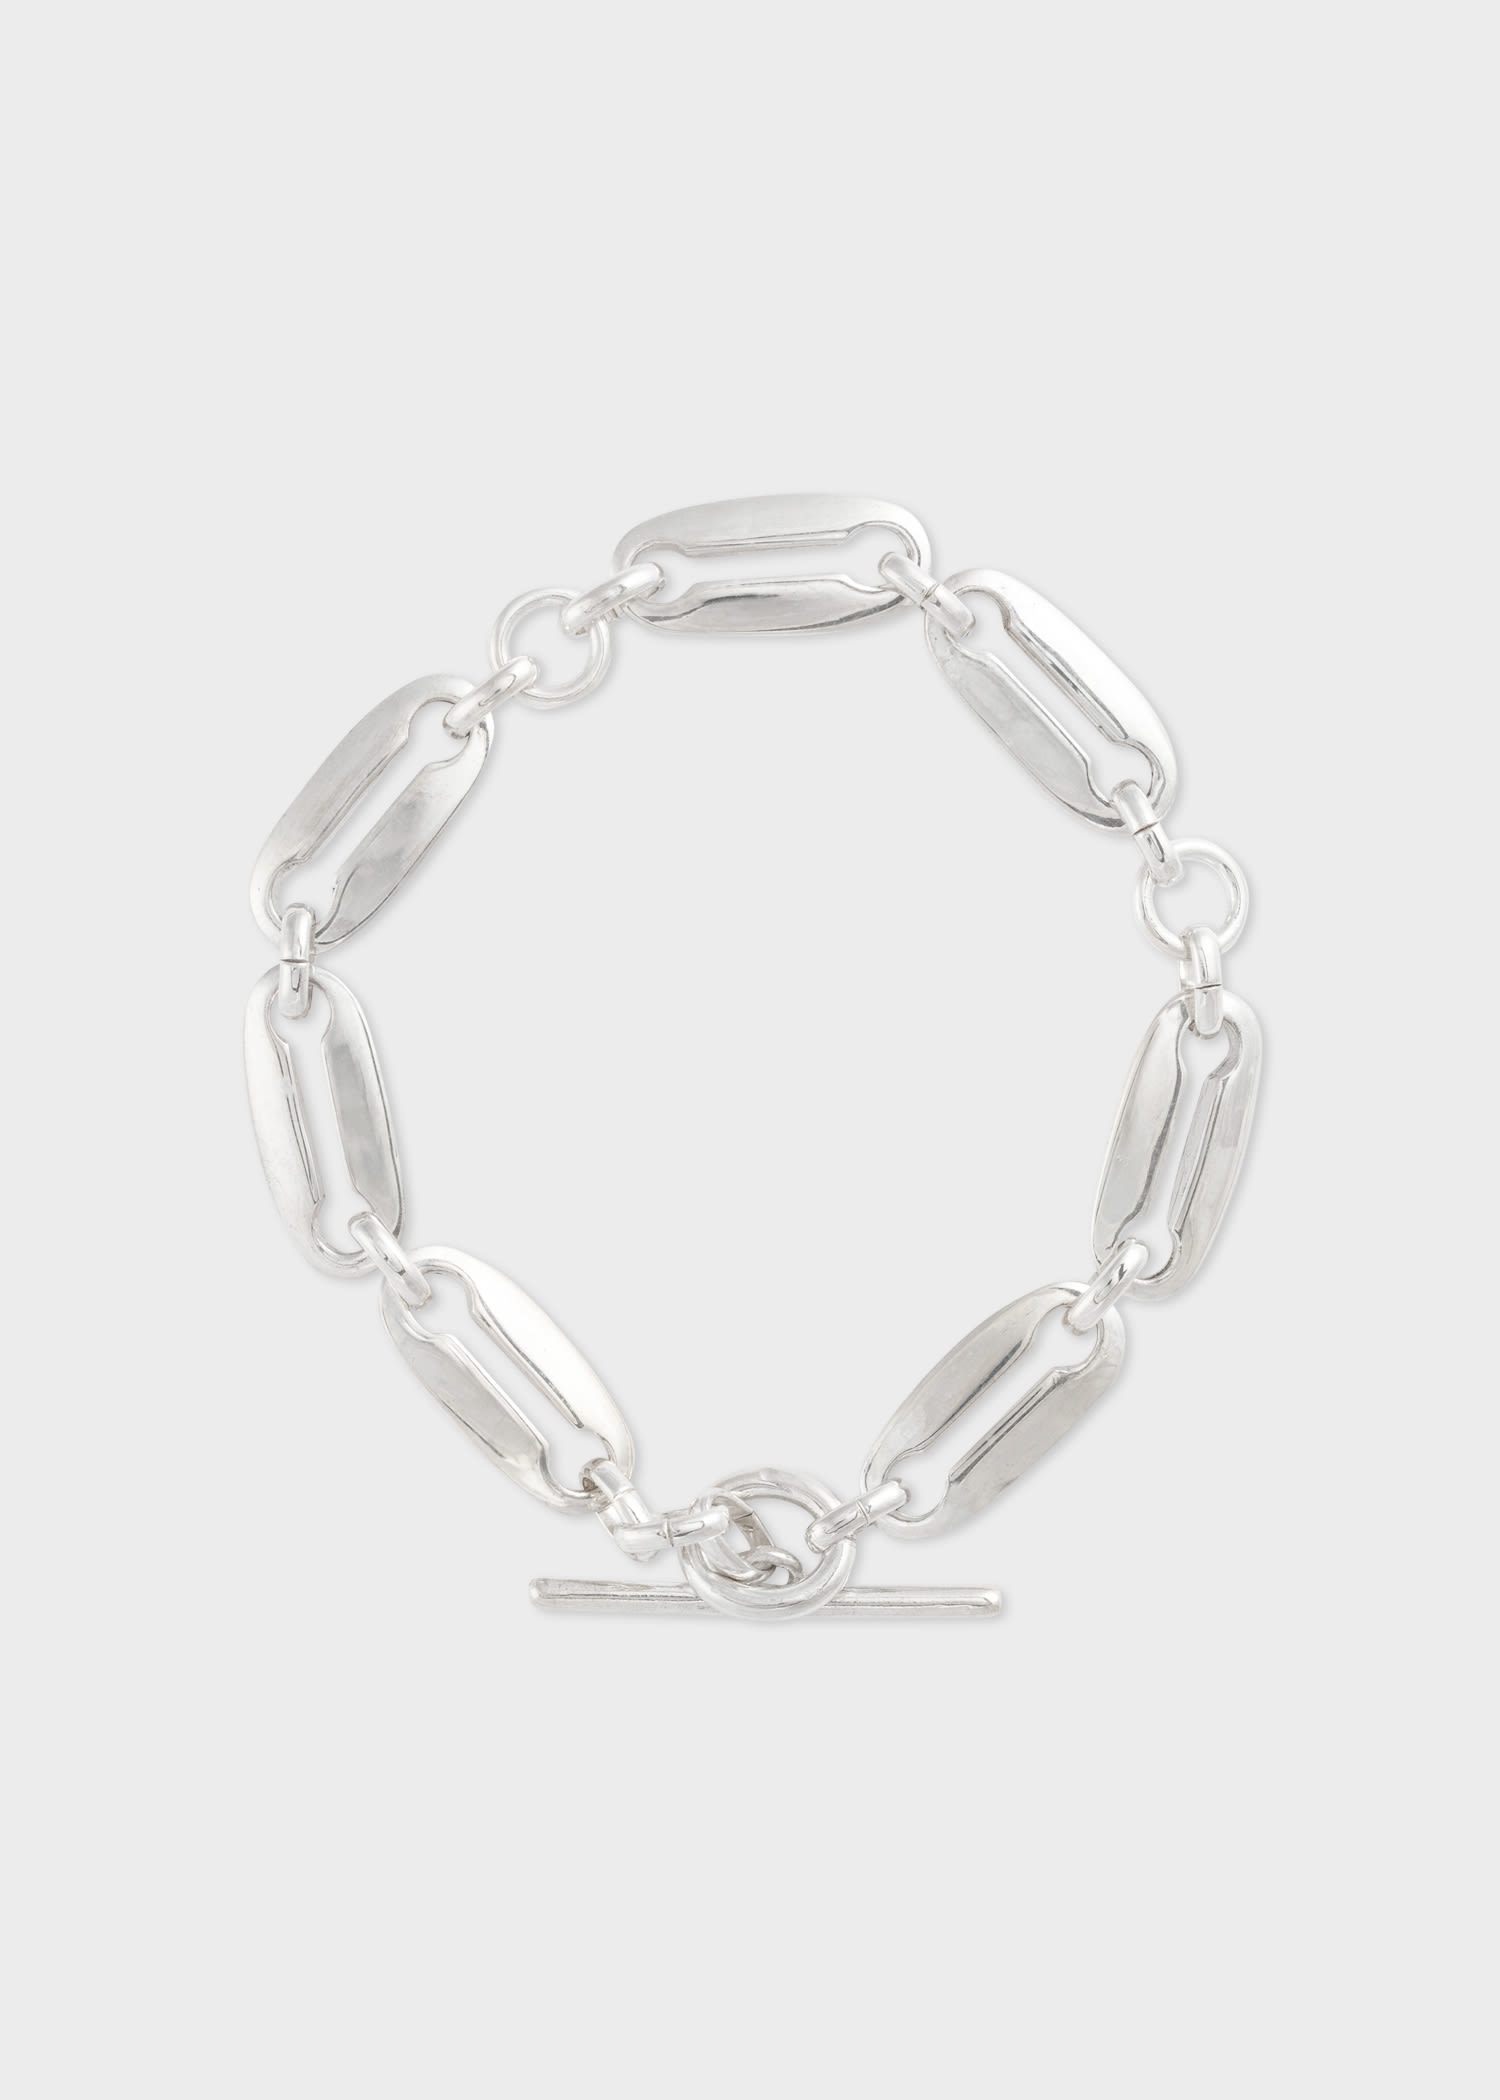 Oval Link Bracelet by Helena Rohner - 1